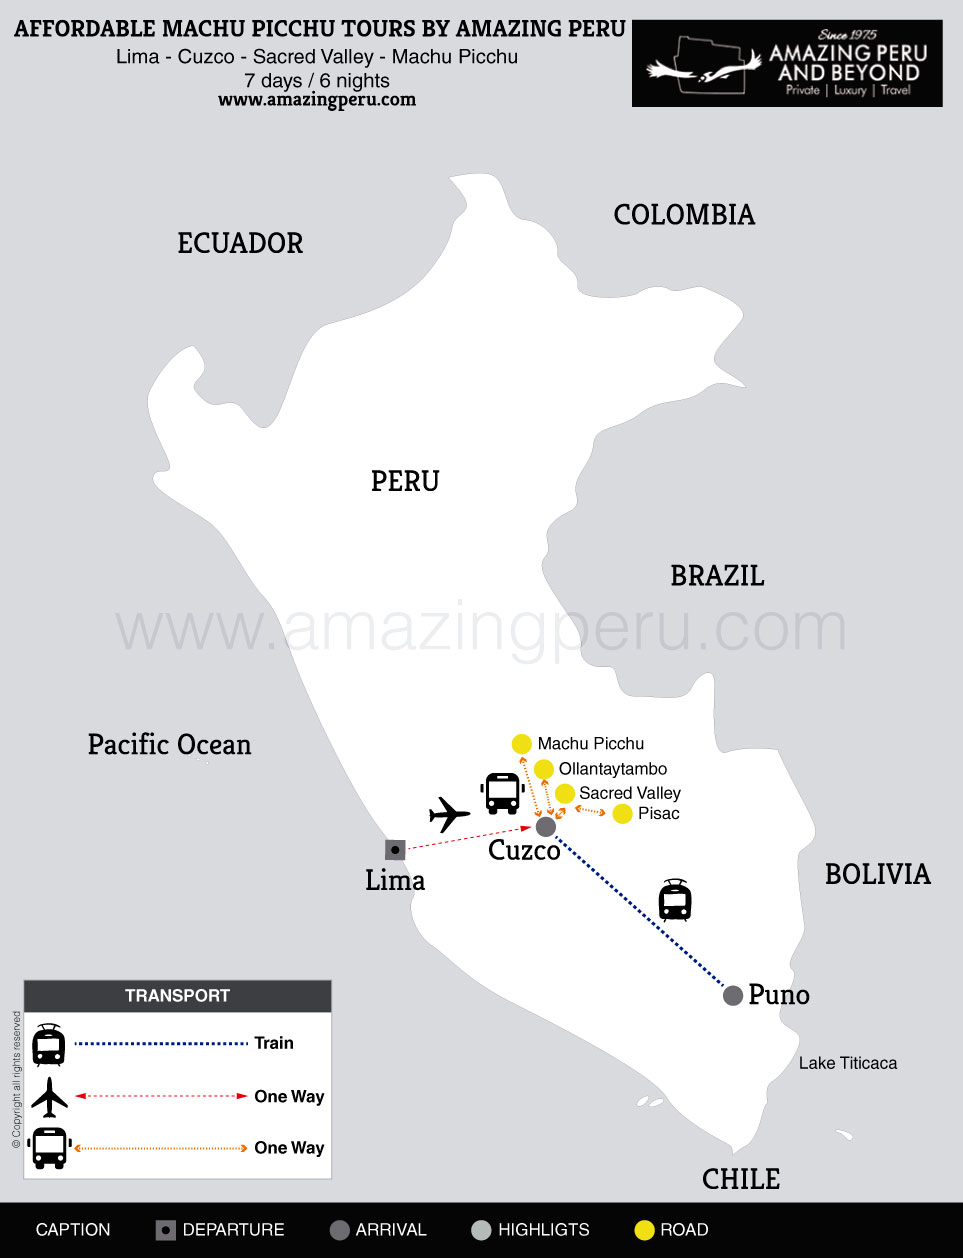 2023 Affordable Machu Picchu Tours by Amazing Peru - 7 days / 6 nights.